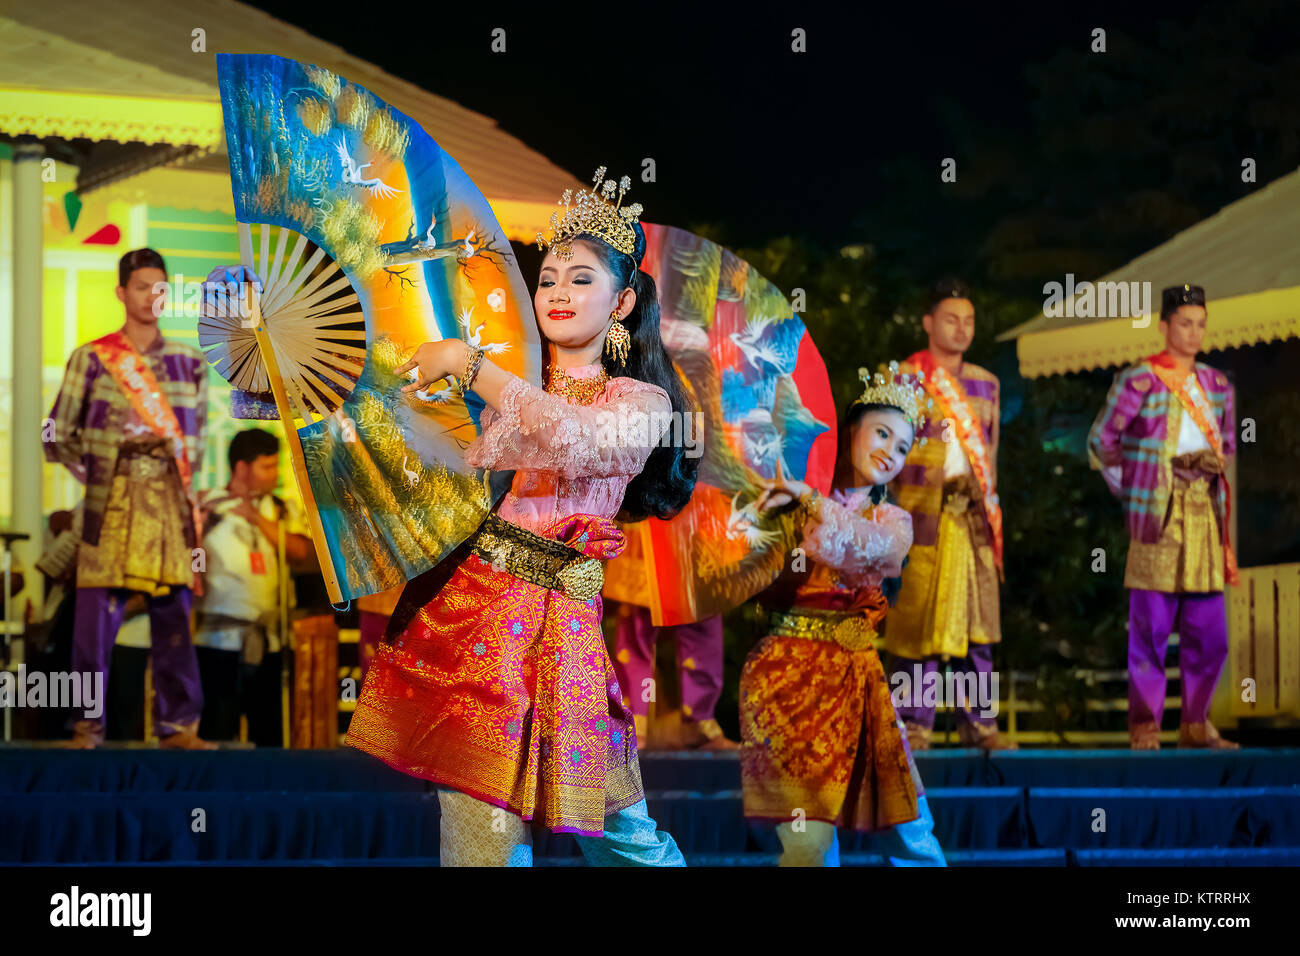 BANGKOK, THAILAND - JANUARY 16: Thai Culture Festival in Bangkok, Thailand on January 16, 2014. Participants take part in the celebration of Thai Trad Stock Photo